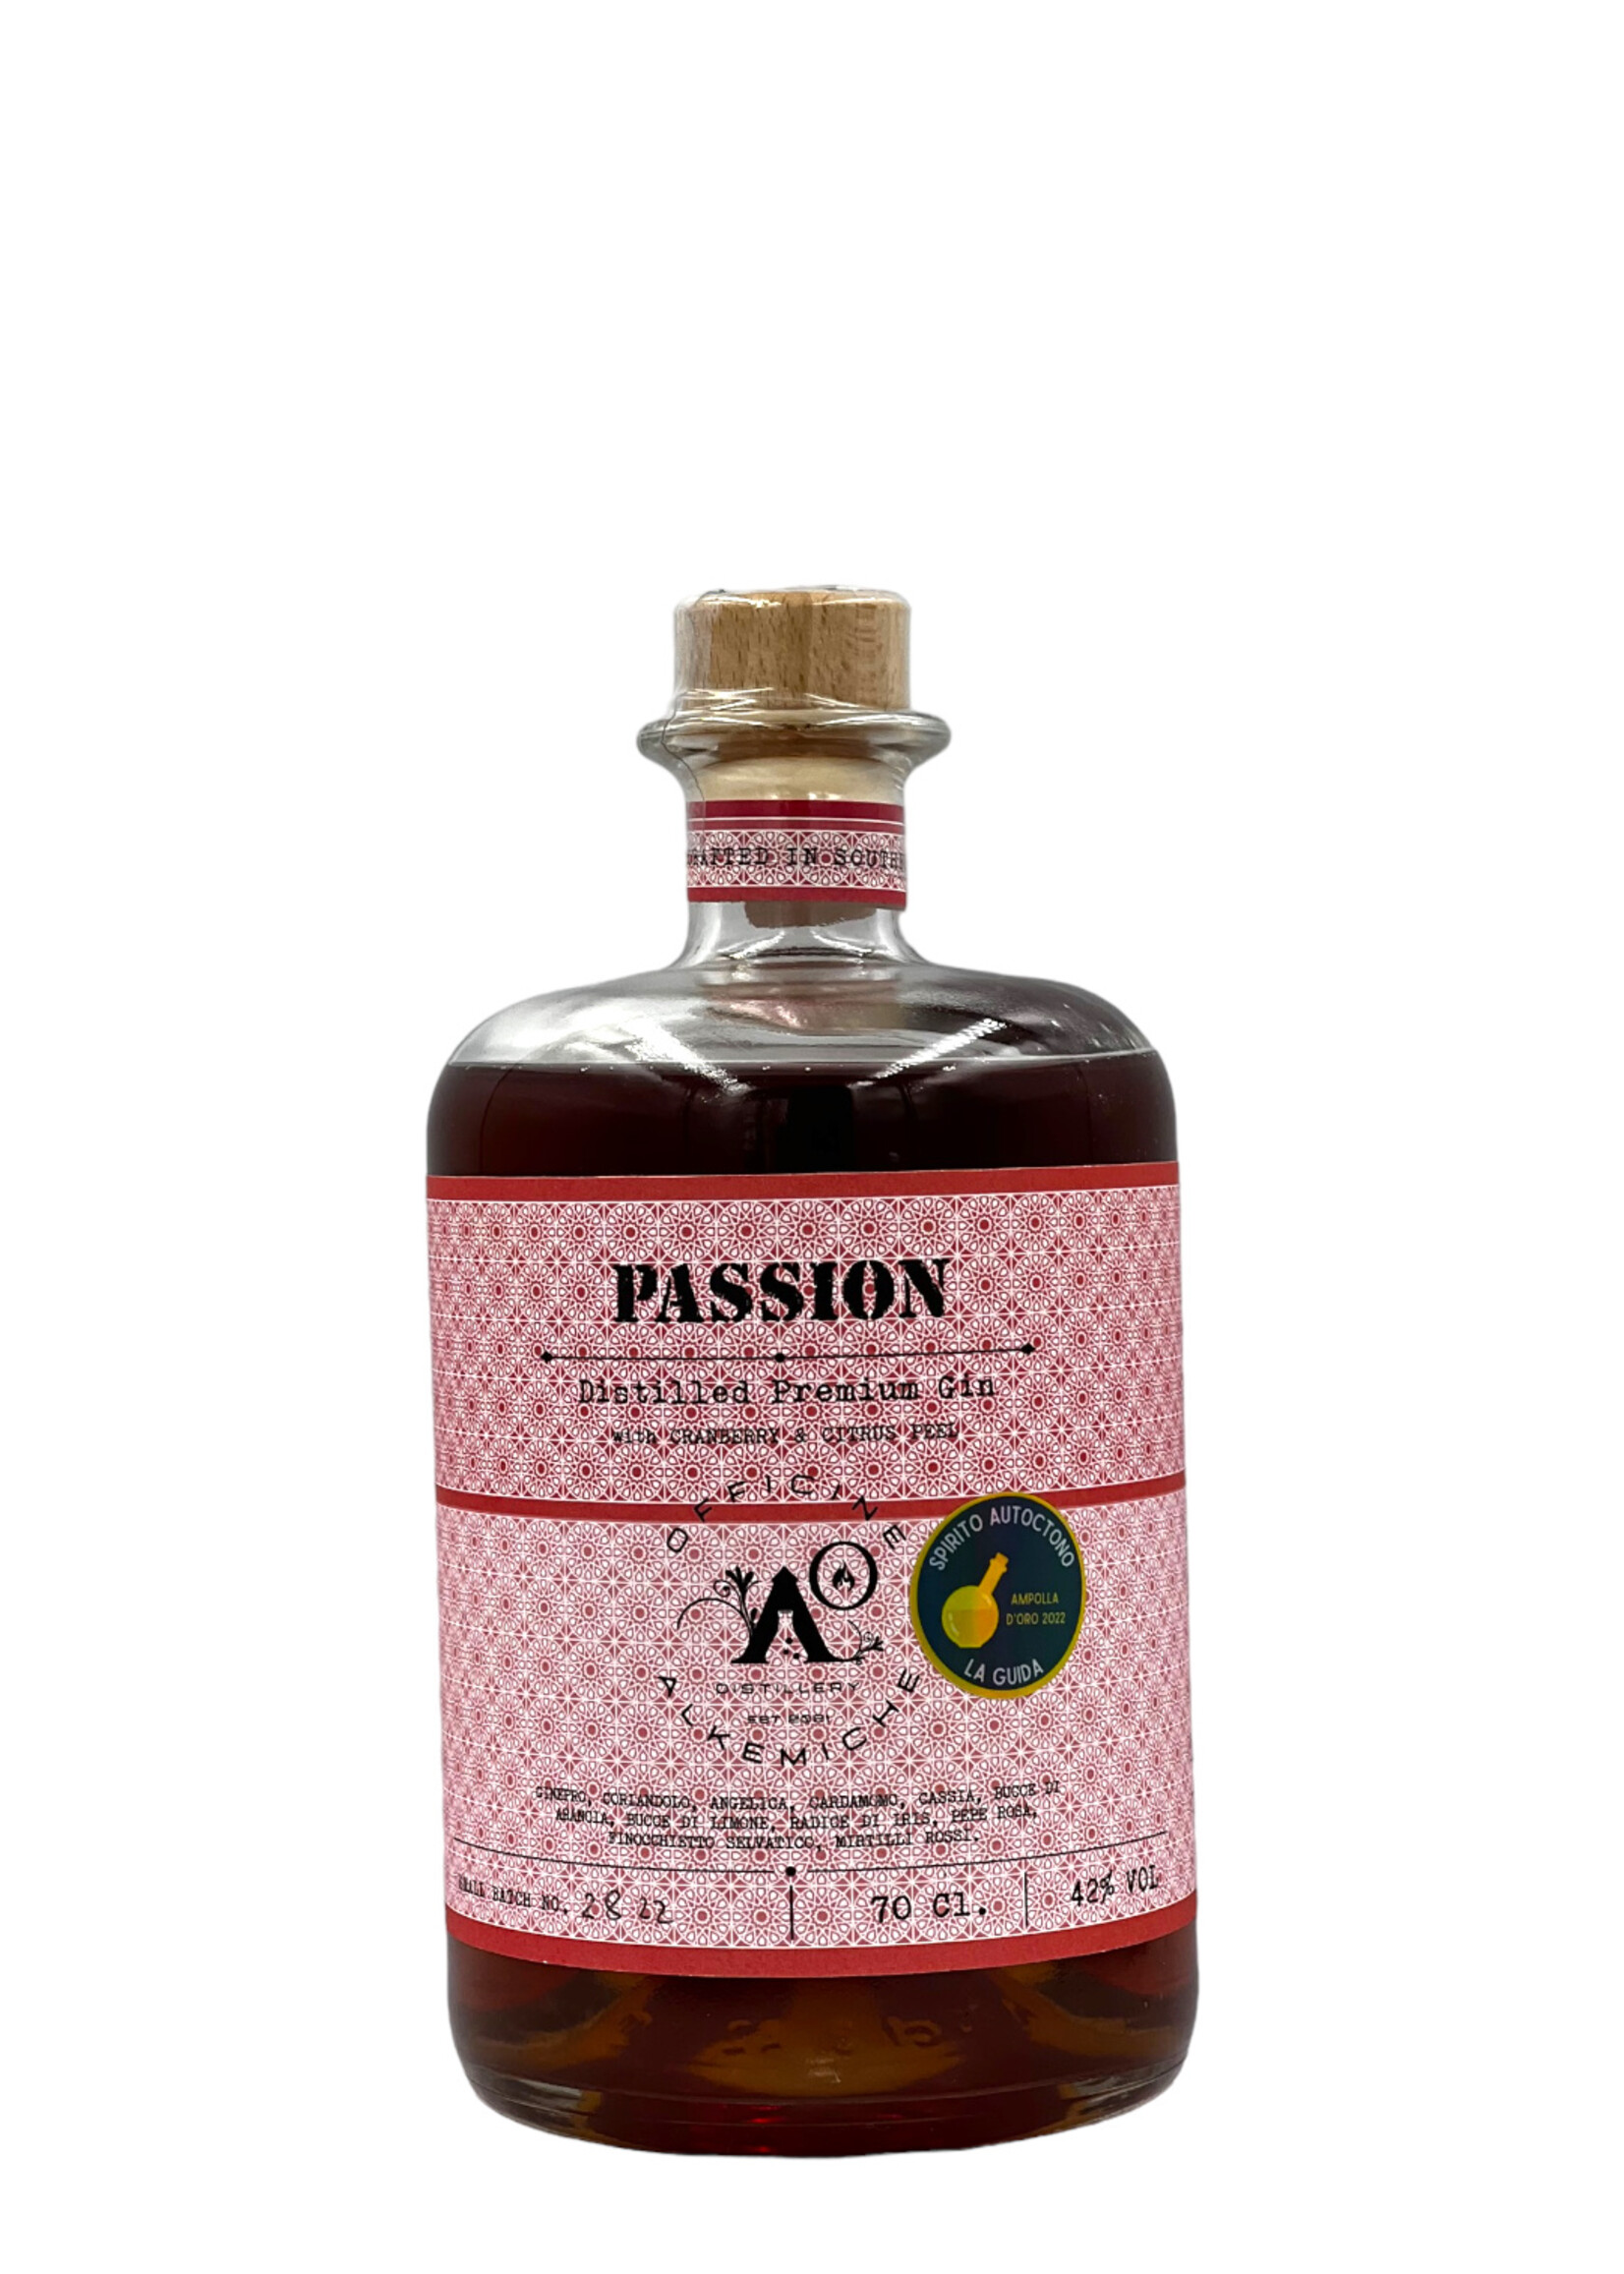 Officine Alkemiche PASSION Distilled Premium Gin  Cranberry & Citrus  42%.-Vol. - 70cl, Ginnart